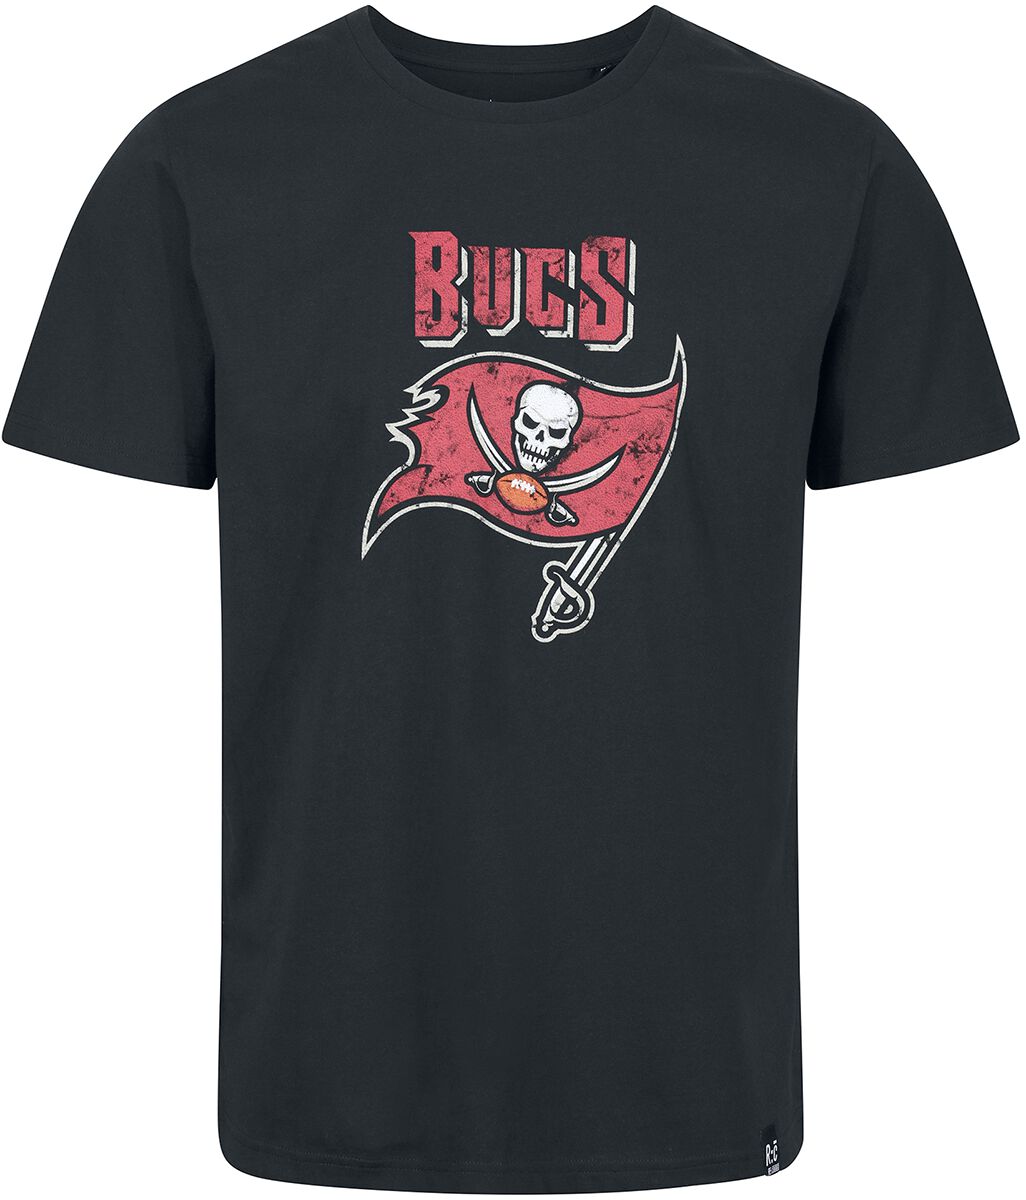 NFL NFL BUCCS LOGO T-Shirt schwarz in S